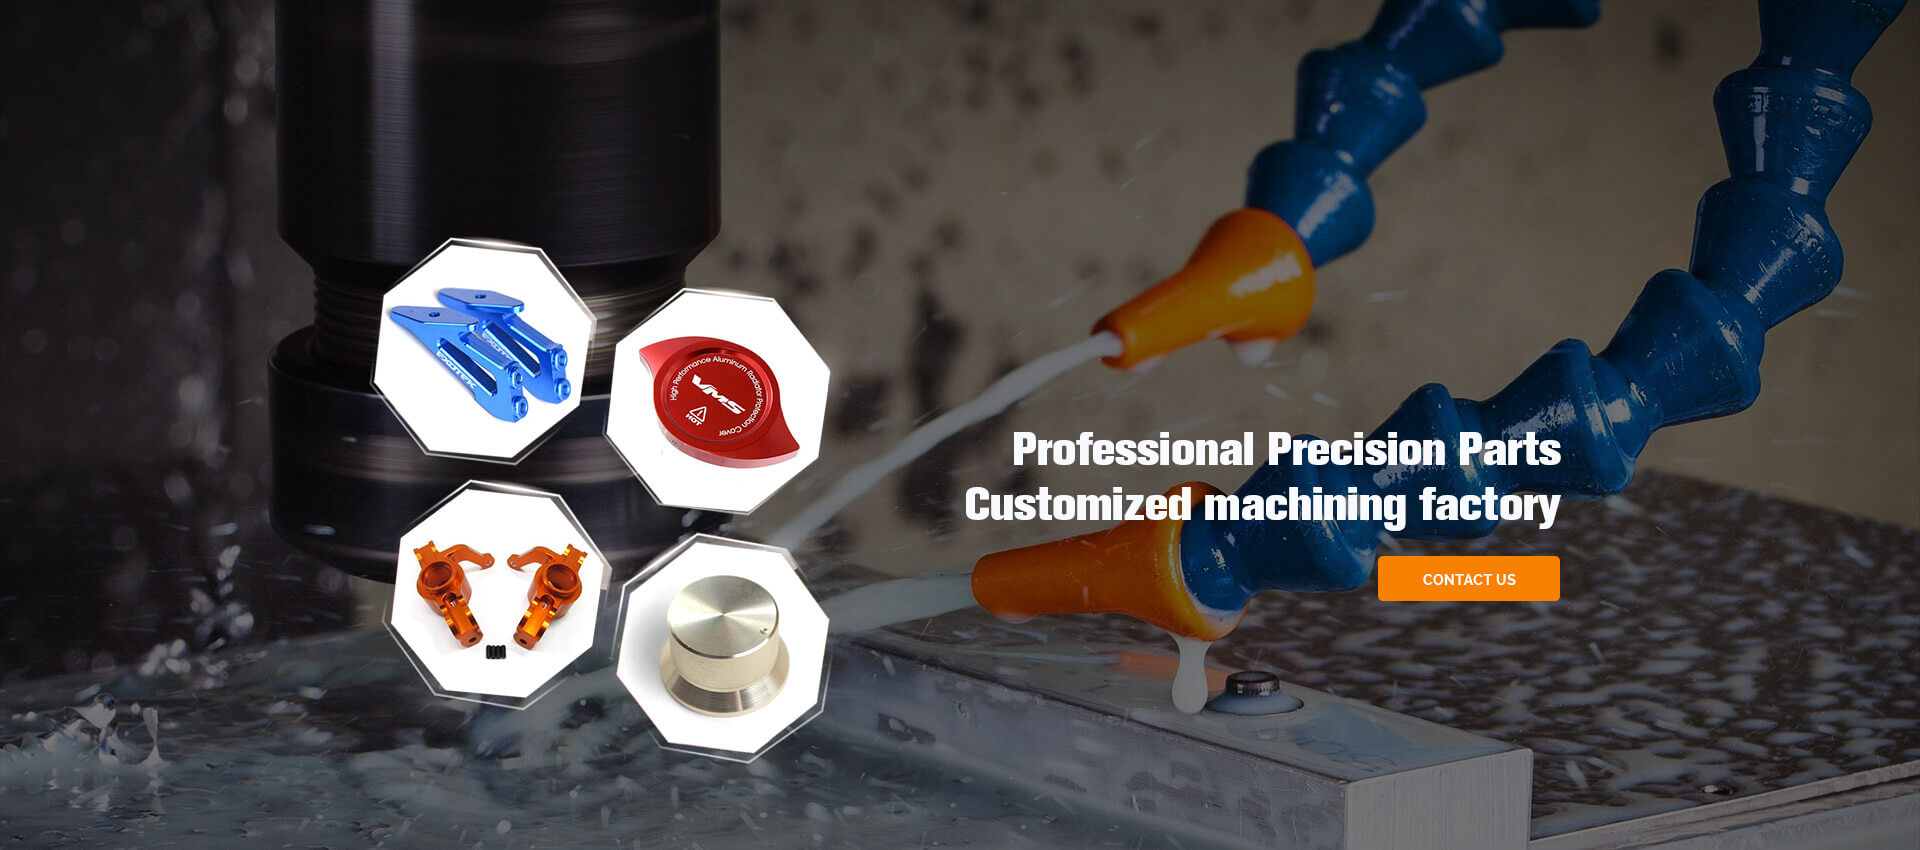 Professional Precision Parts